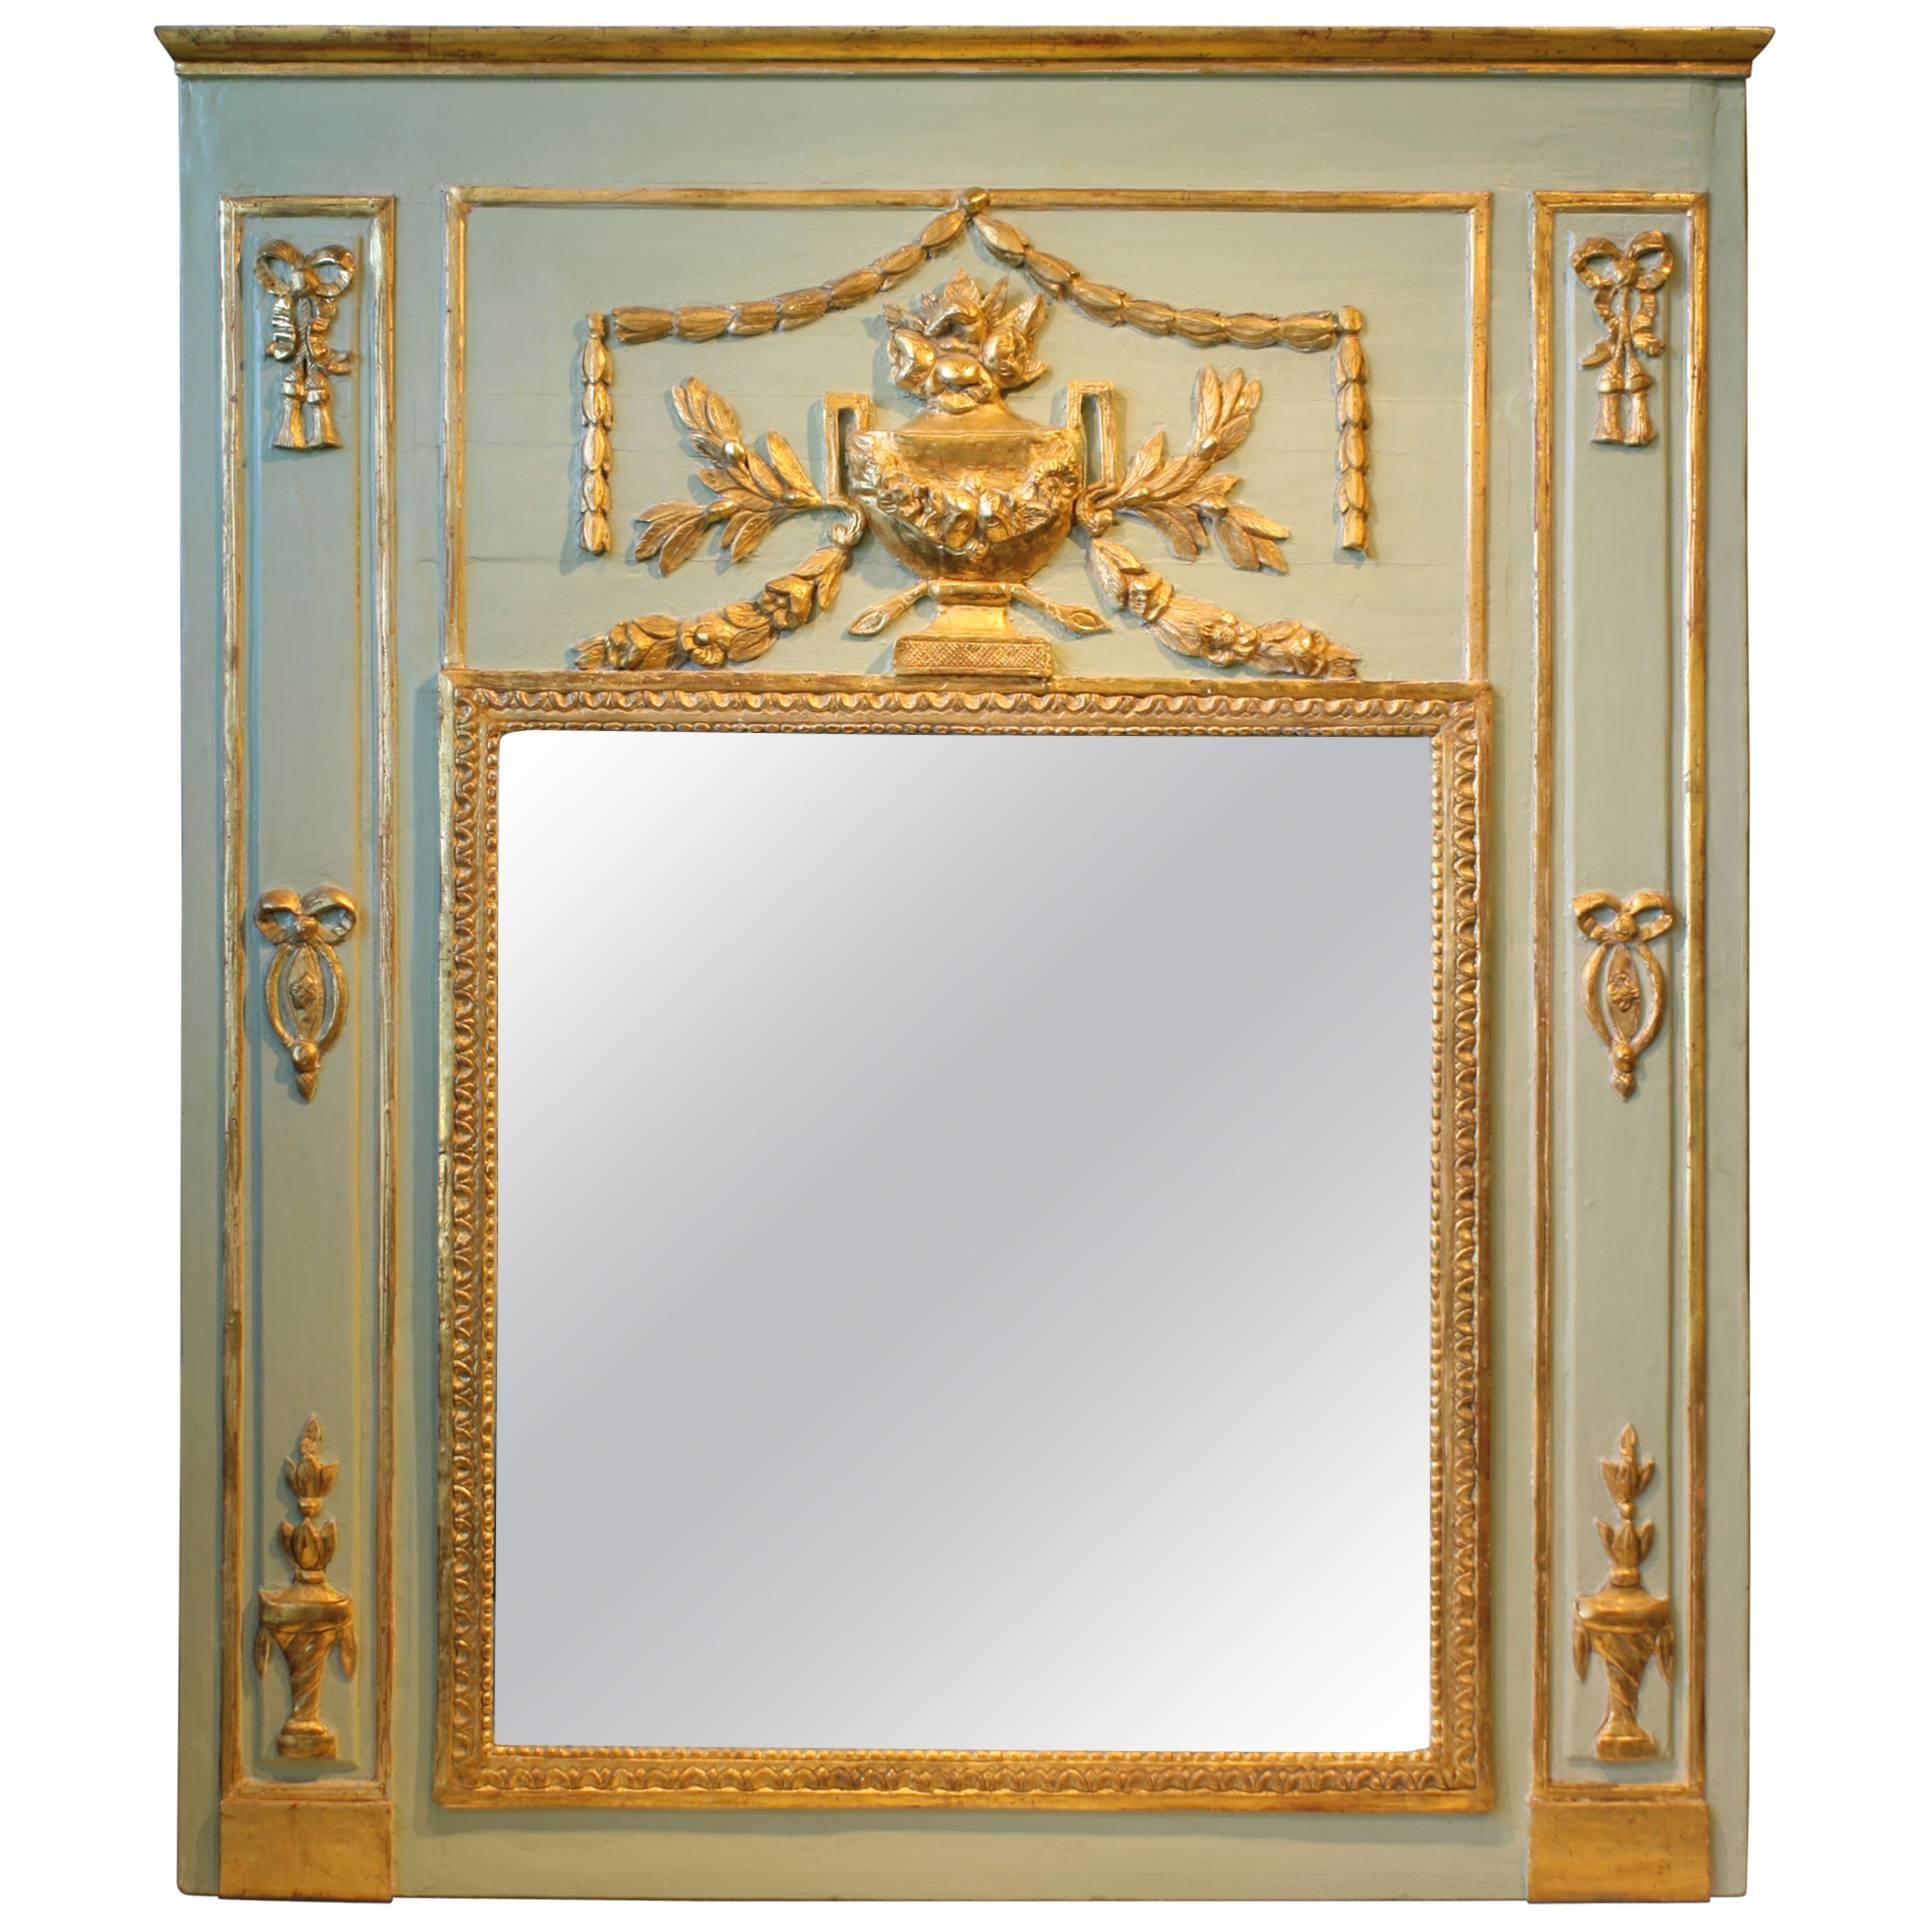 Louis XVI Period Painted and Parcel Gilt Trumeau Mirror